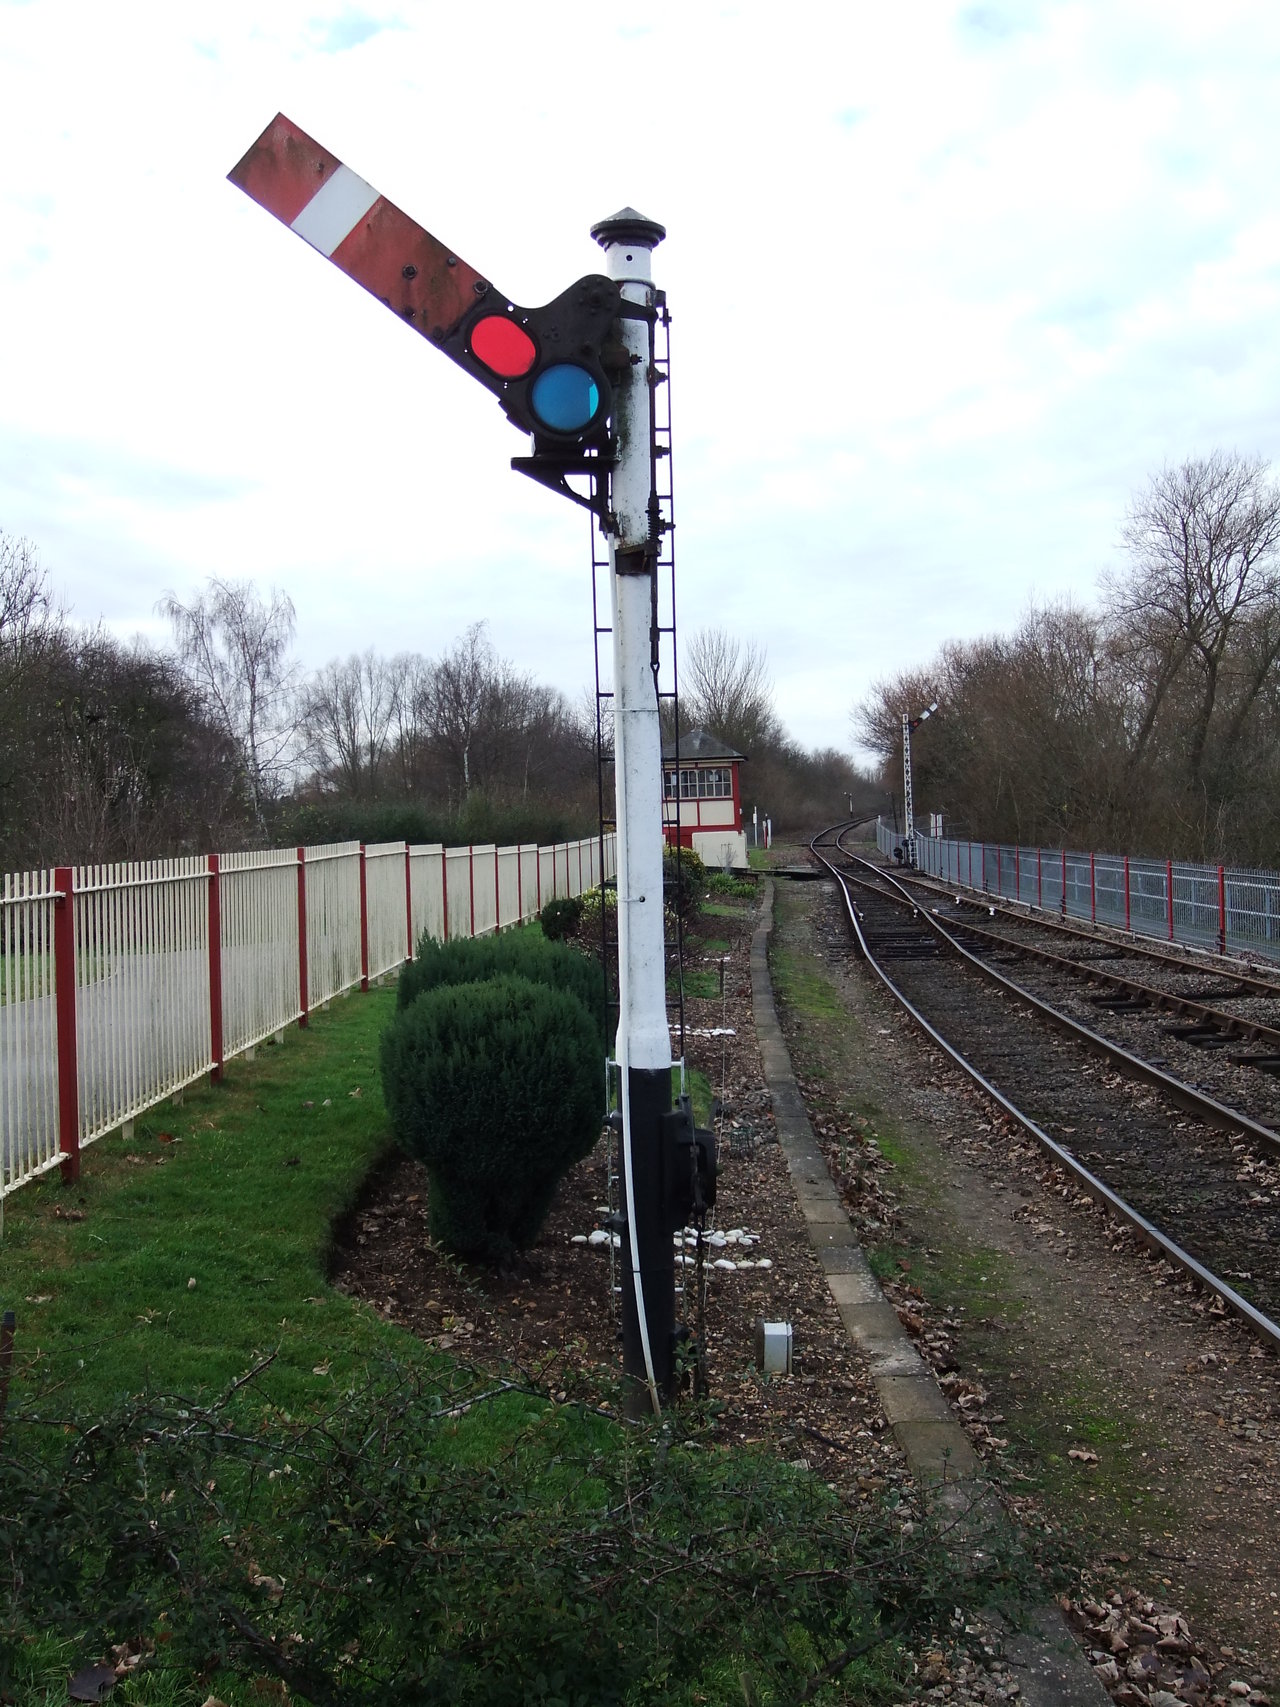 Old Fashioned Railway Signal 02 by fuguestock on DeviantArt